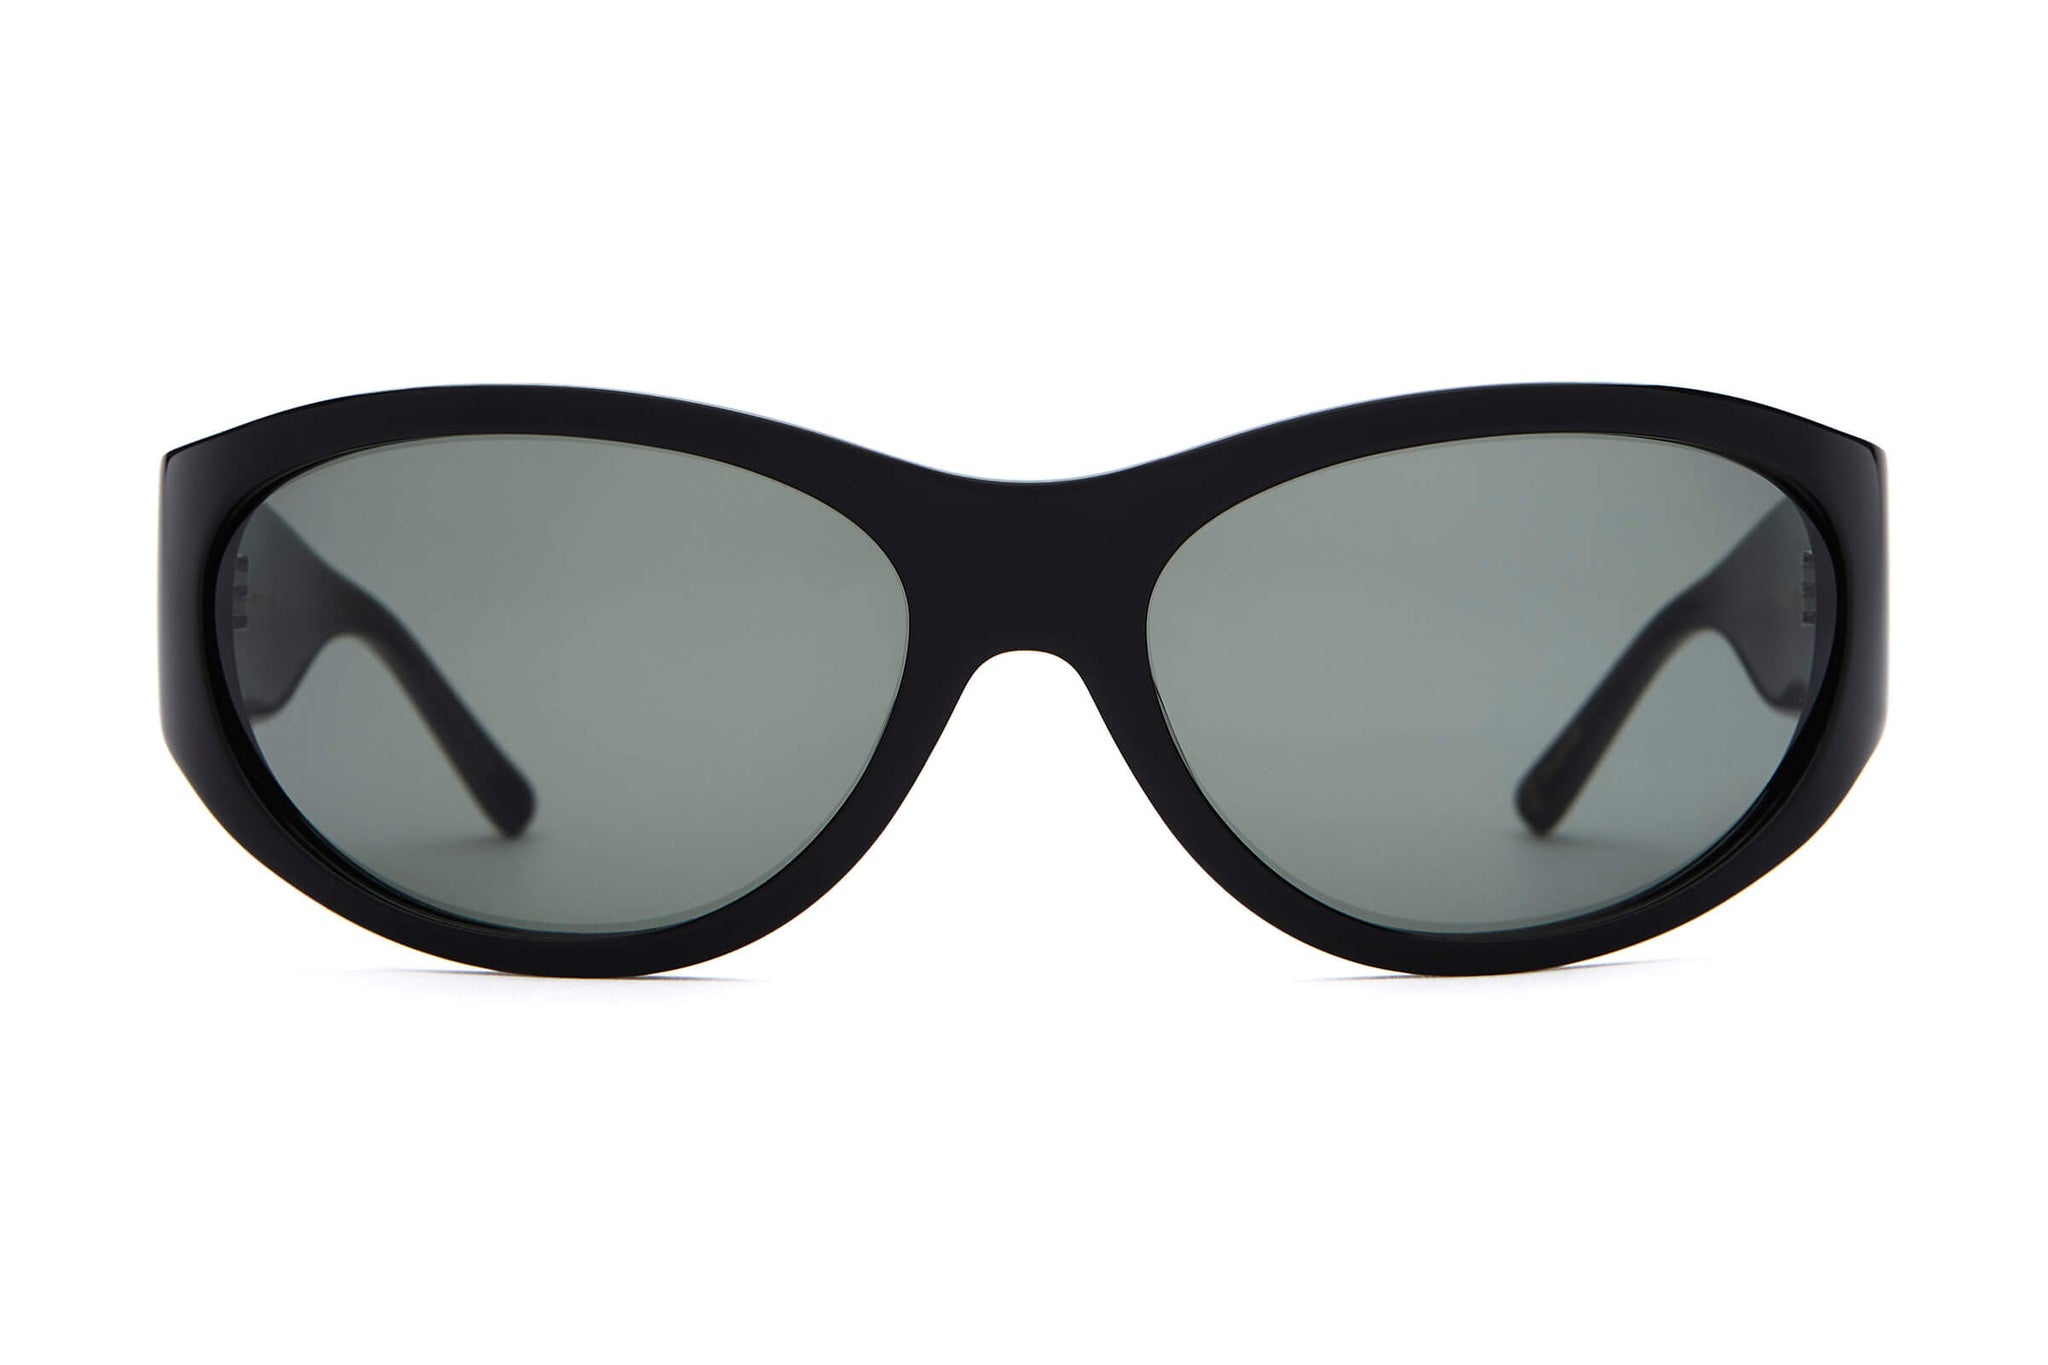  LVIOE Over Glasses Sunglasses Wrap Around Polarized